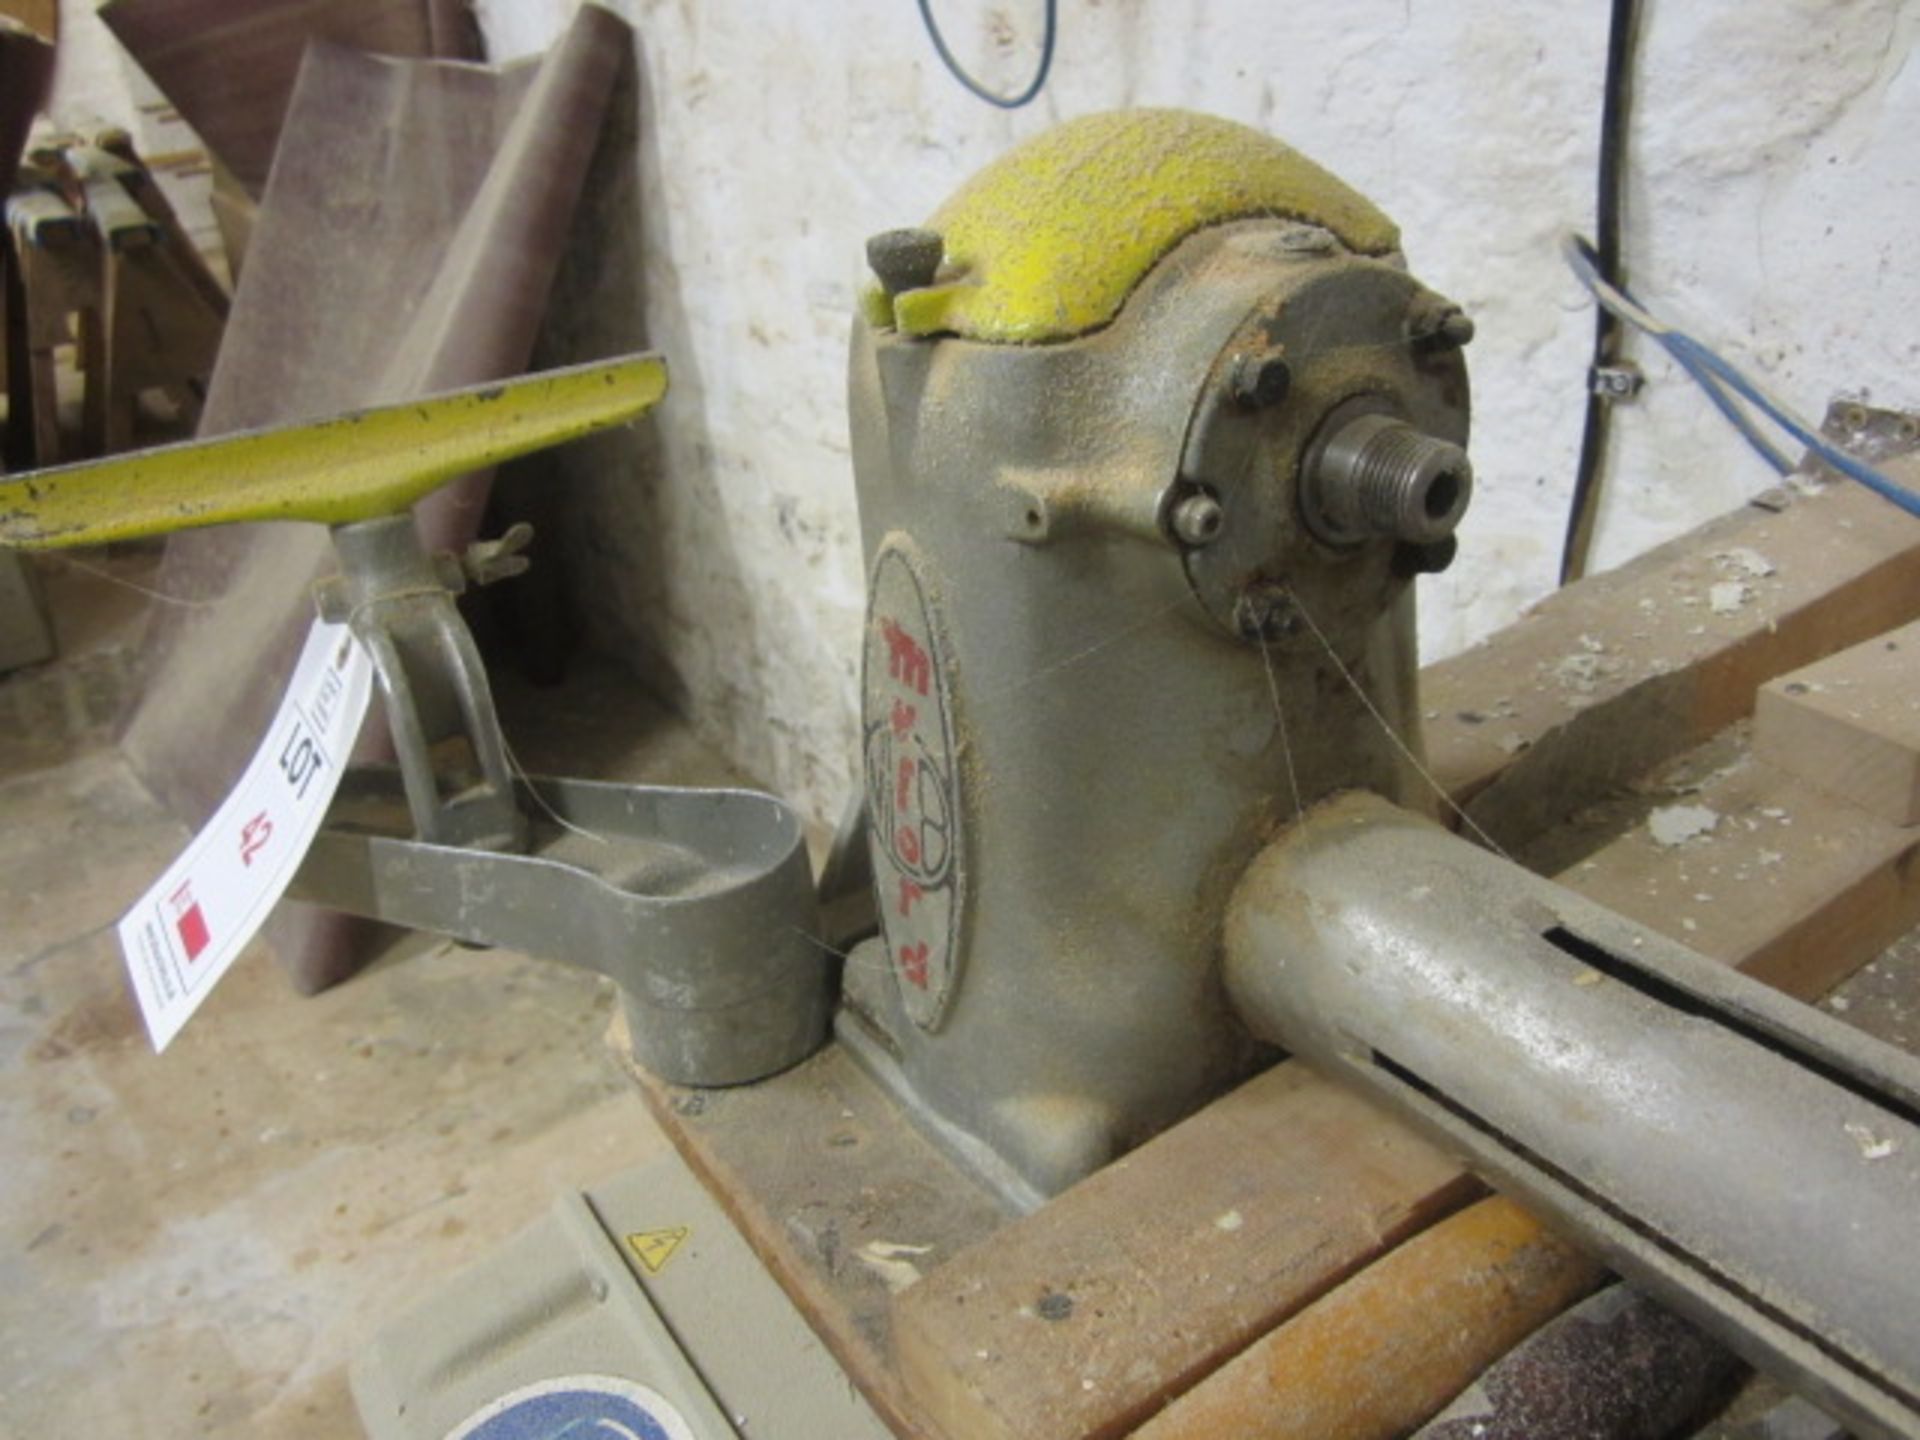 Myfold bench top wood turning lathe, Driv Loc electronic DC injection brake, various hand tools, - Image 2 of 6